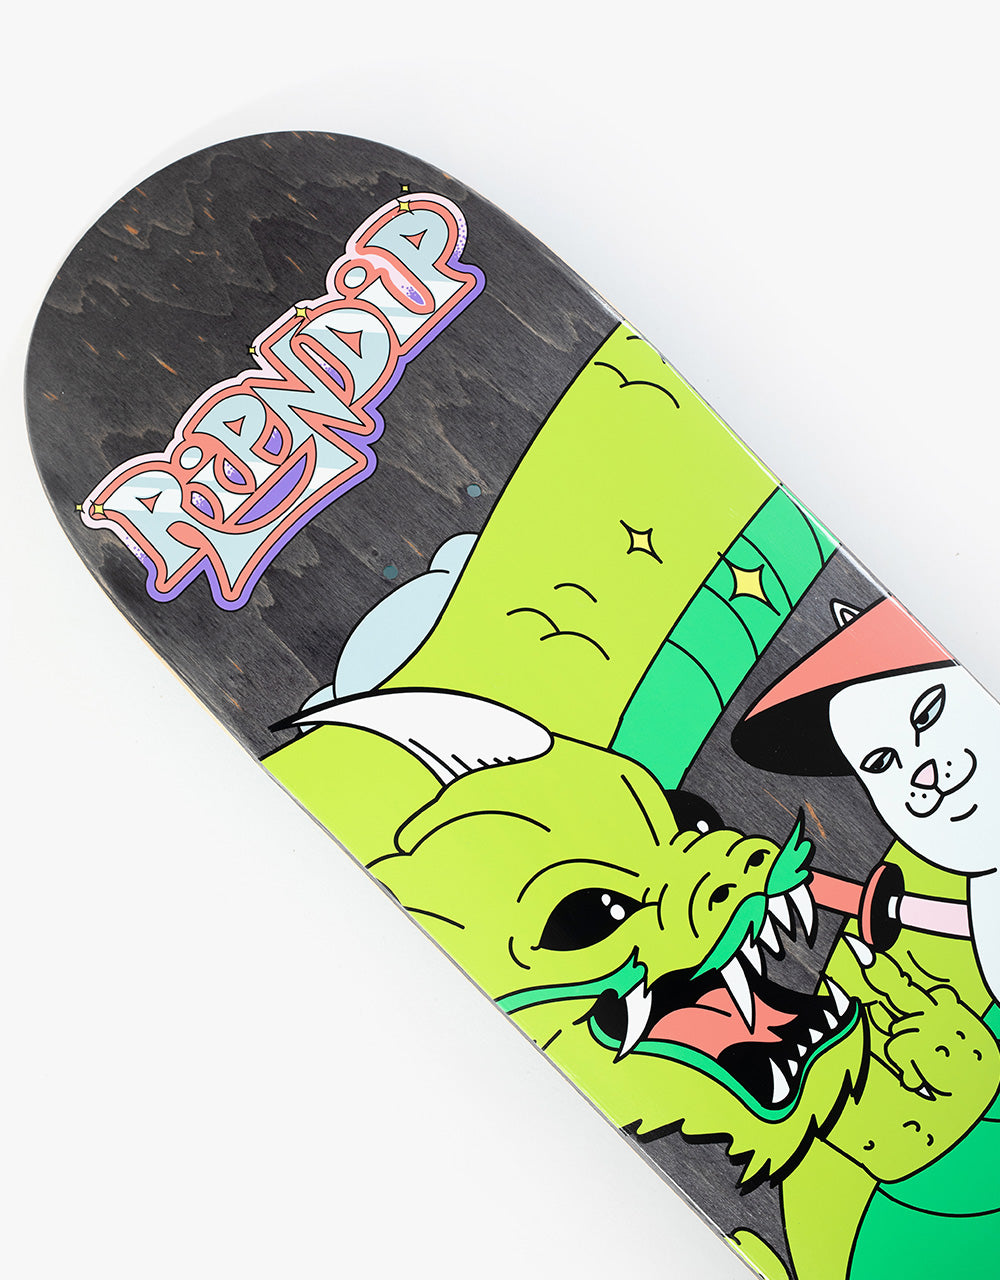 RIPNDIP Sensai Skateboard Deck - 8"